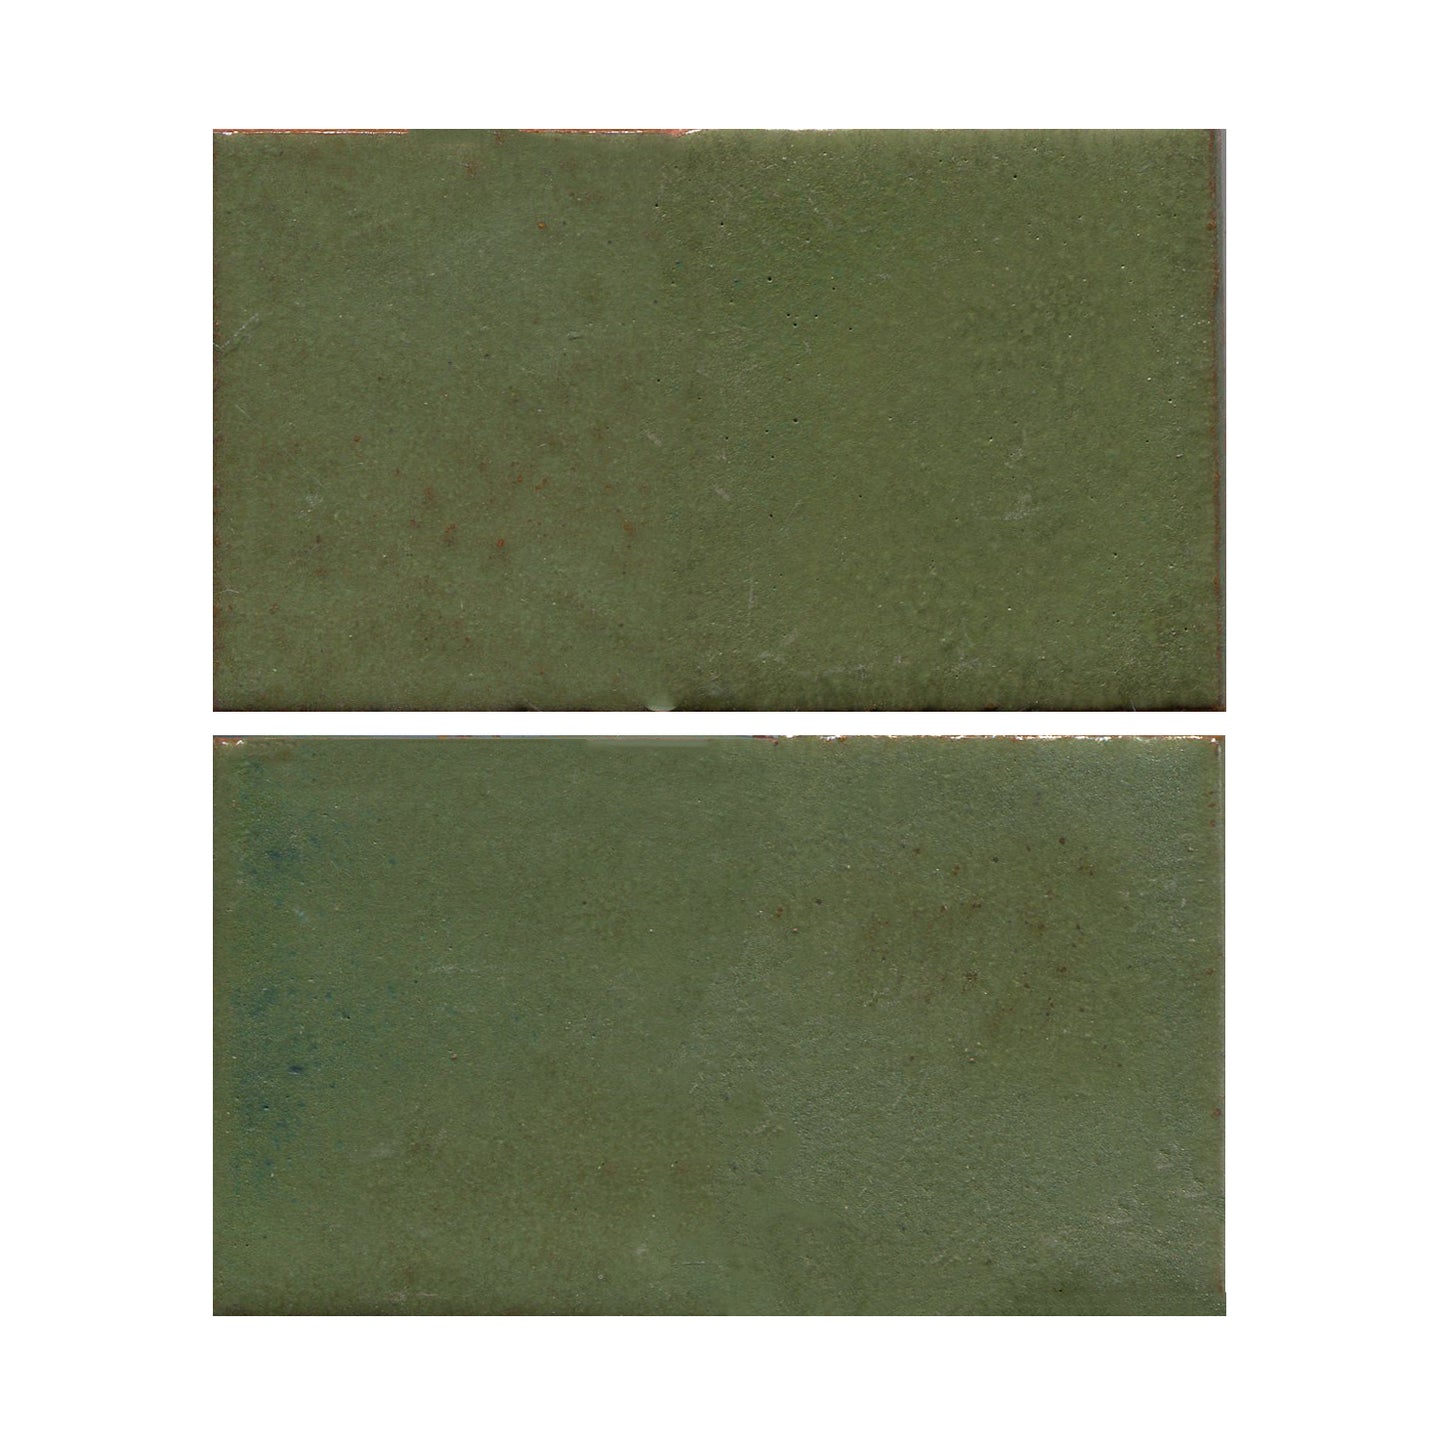 Pesto green 4x6 field tile